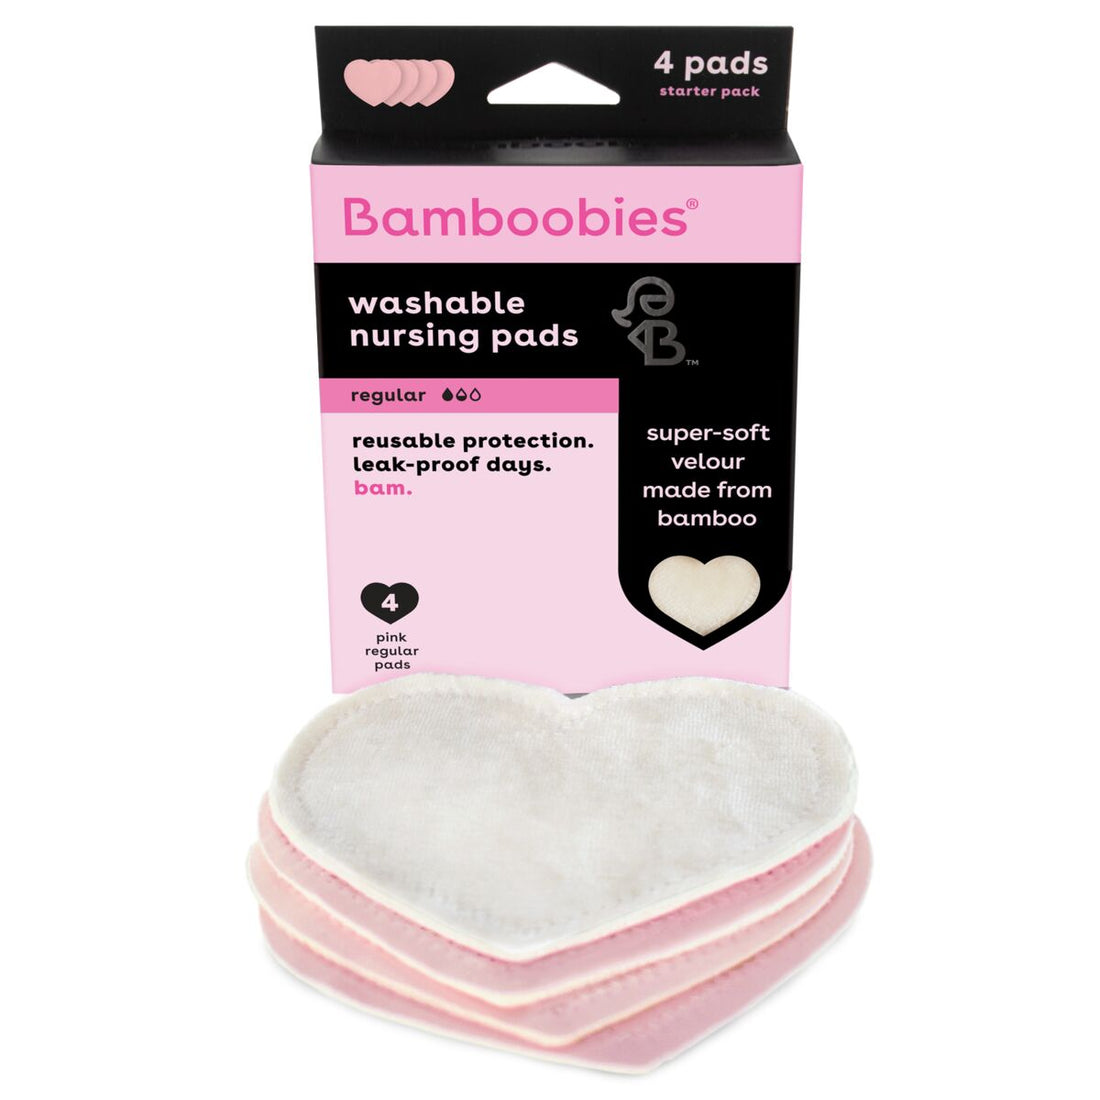 Buy Babyworks Bamboo Reusable Nursing Pads Bundle at